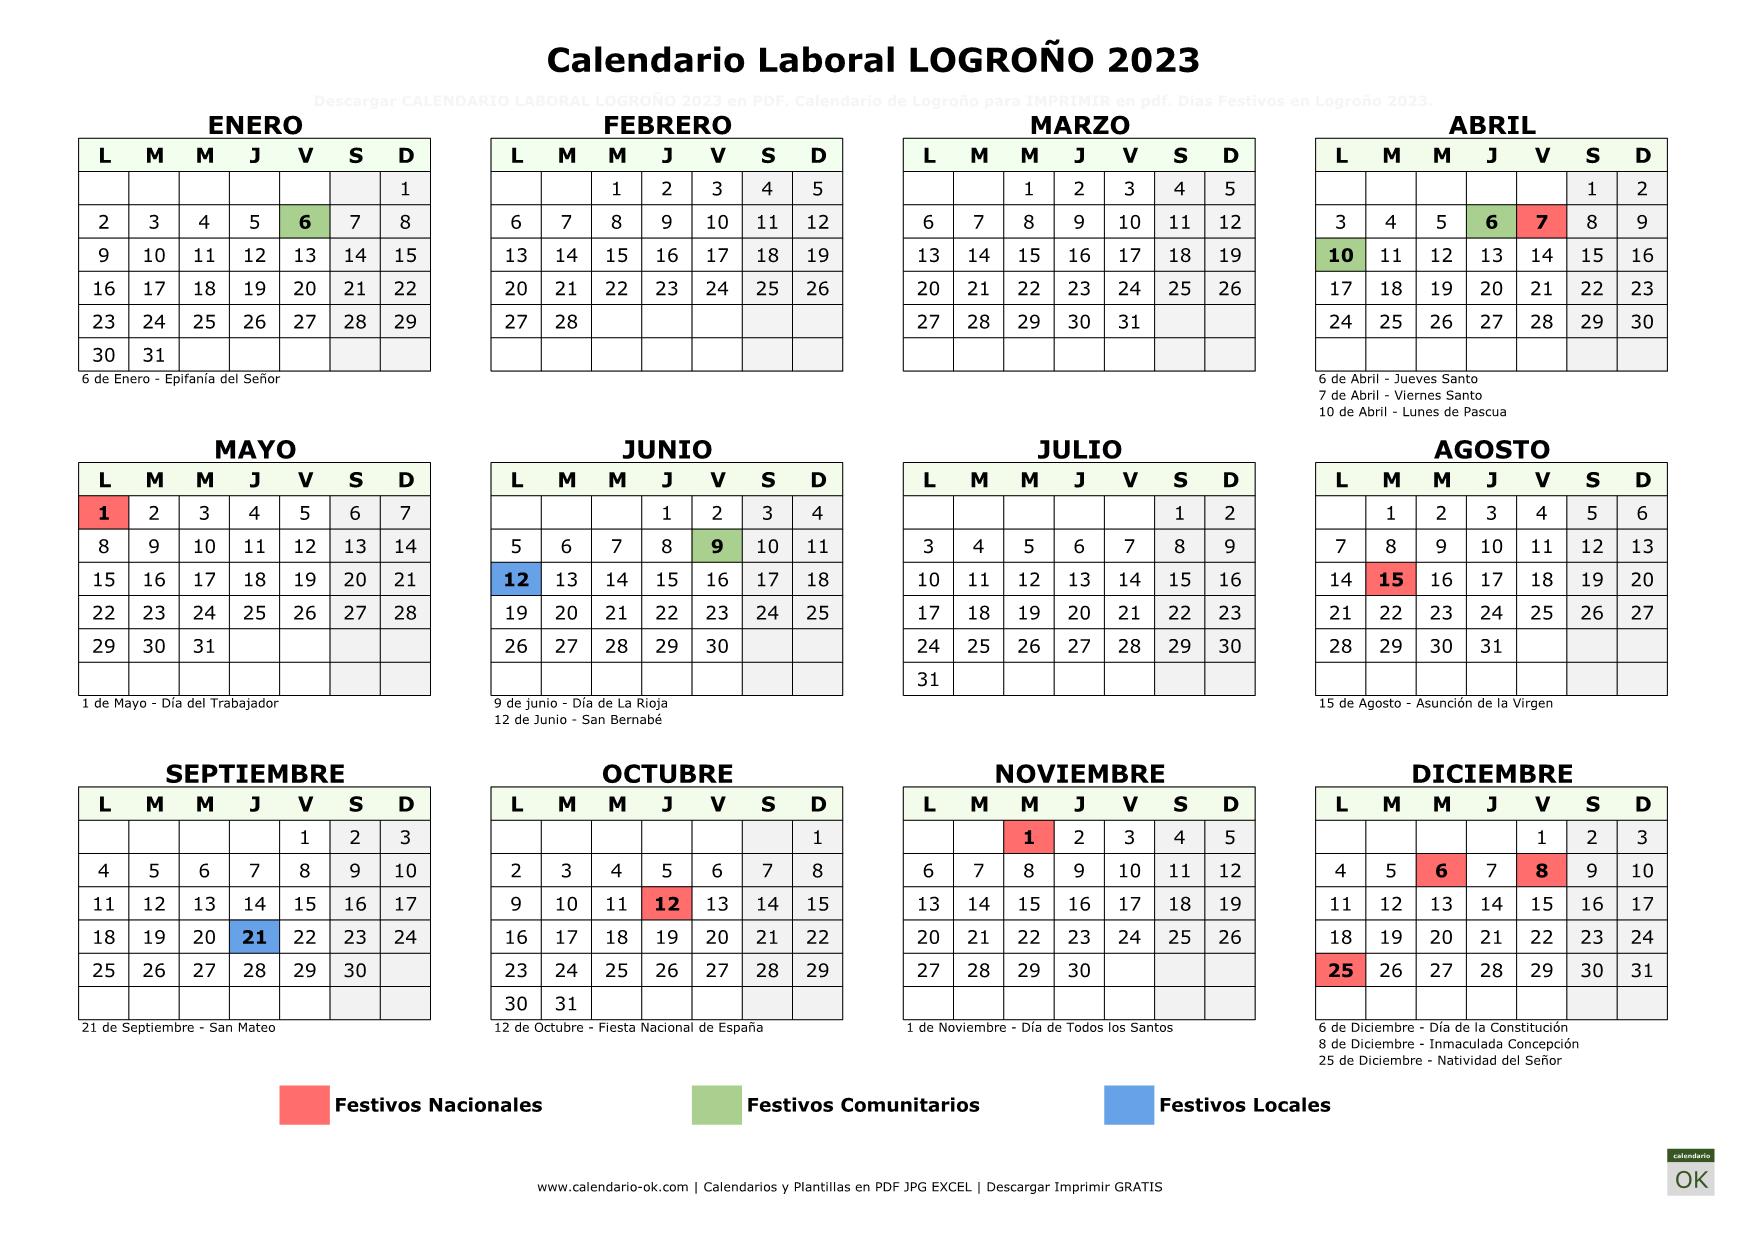 Festivo En Logroño 2023 ▷ Calendario Laboral LOGROÑO 2023 | PDF | JPG